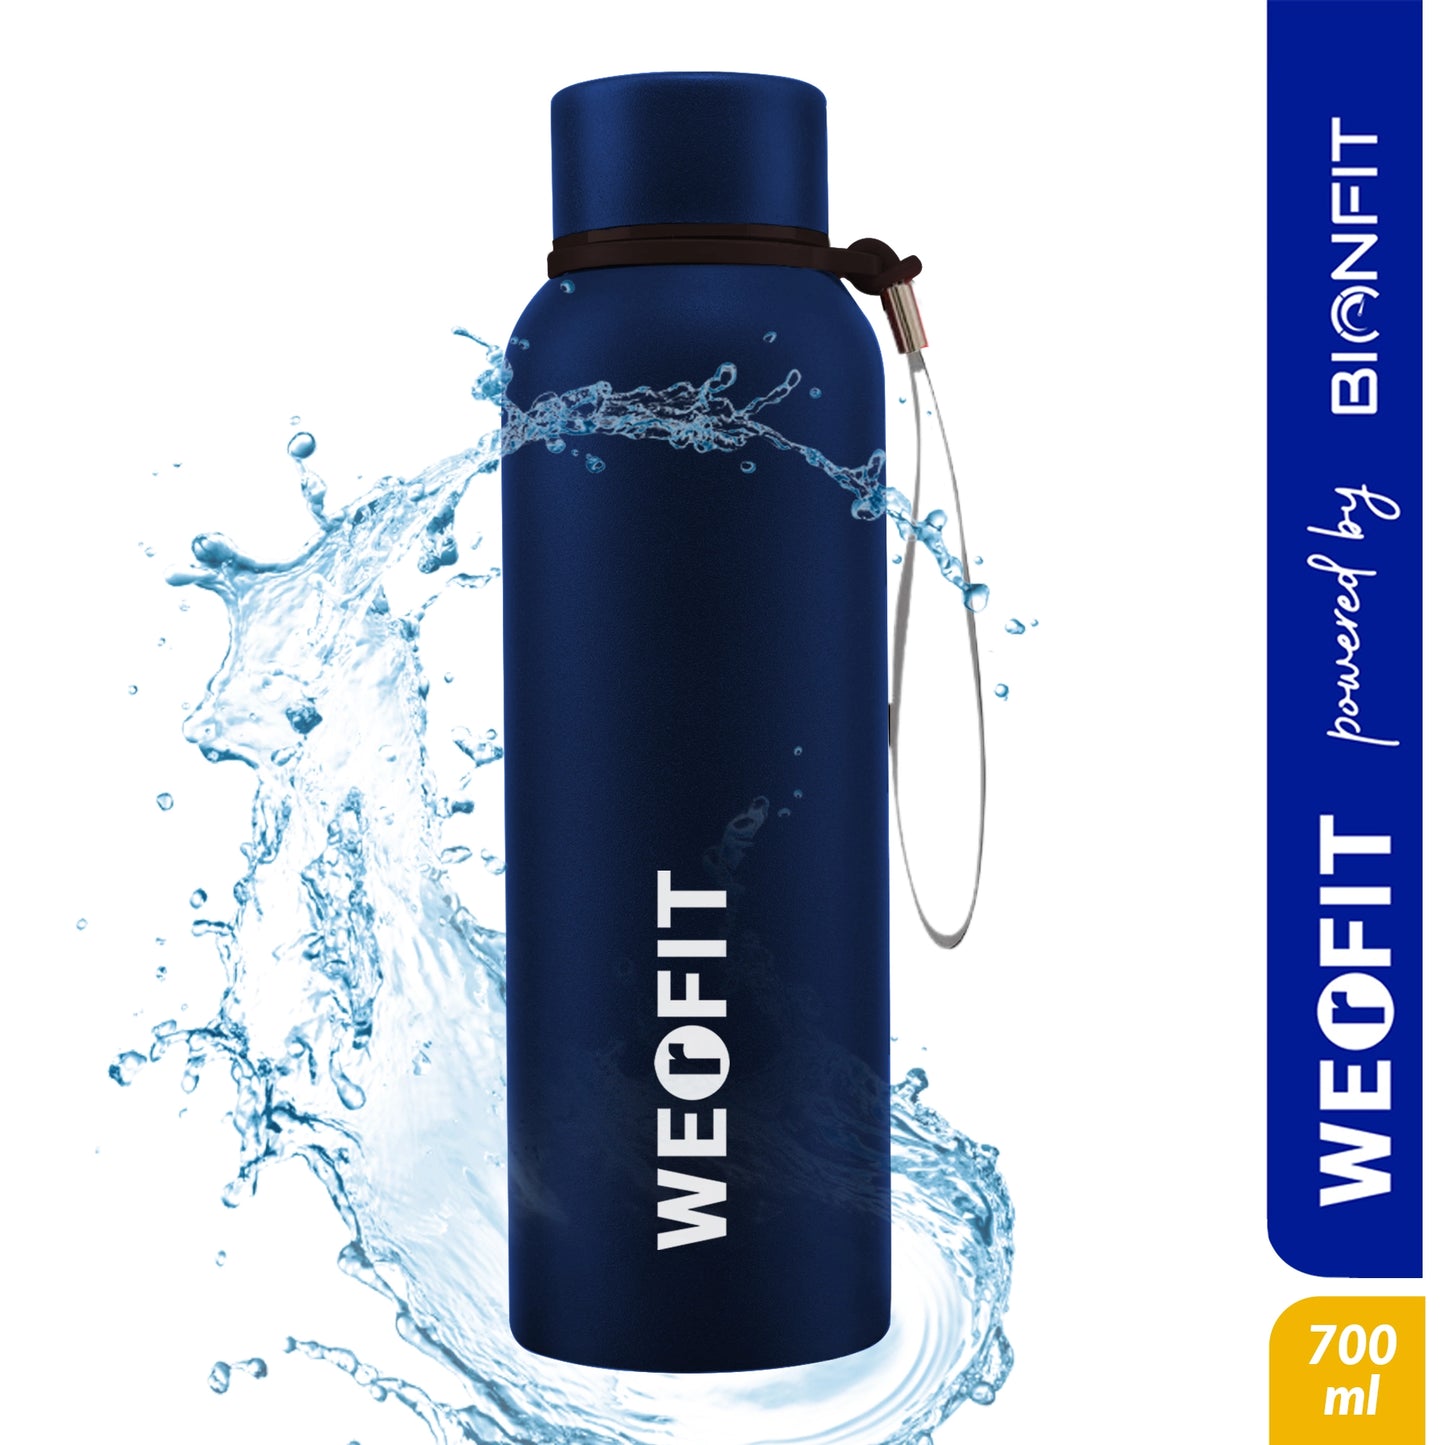 WErFIT Steel Water Bottle for Sports, Hiking, Home, Gym, Office, School, Carrying Strap 700 ml Shaker  (Pack of 1, Blue, Steel)